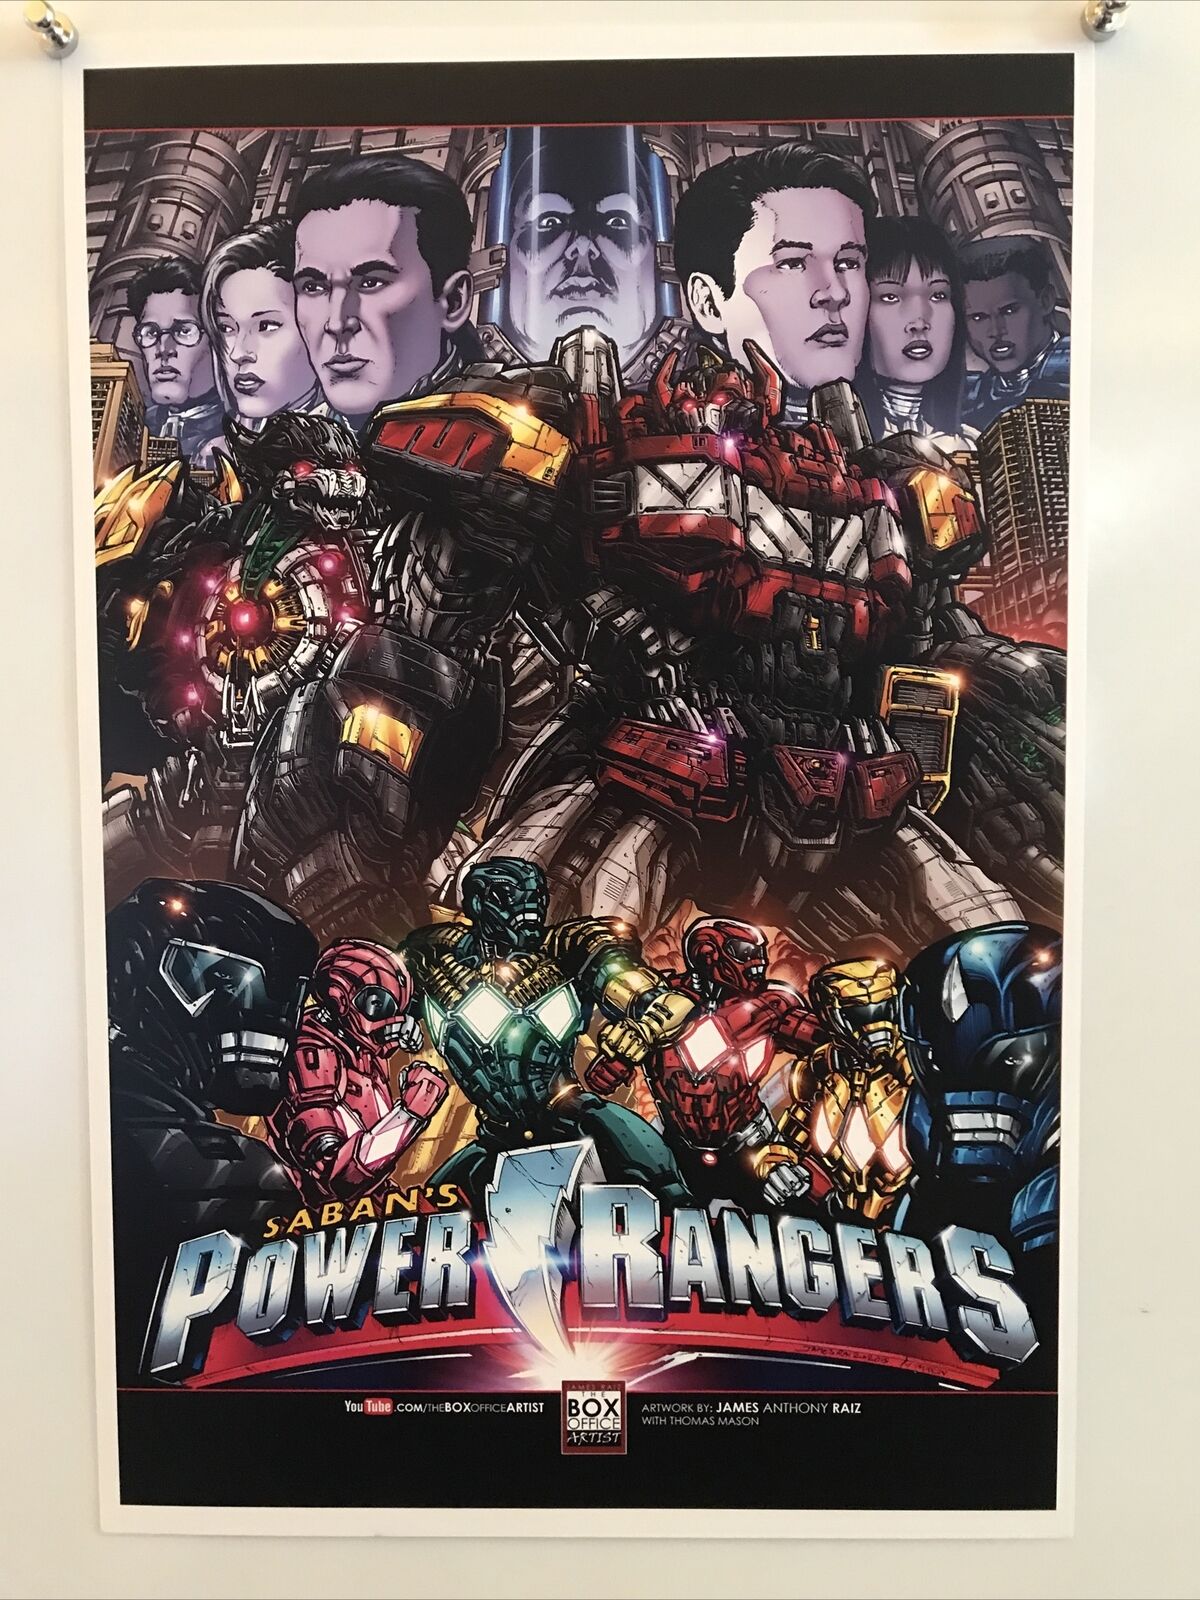 Lot of 2 Poster Alamo City Comic Power Rangers